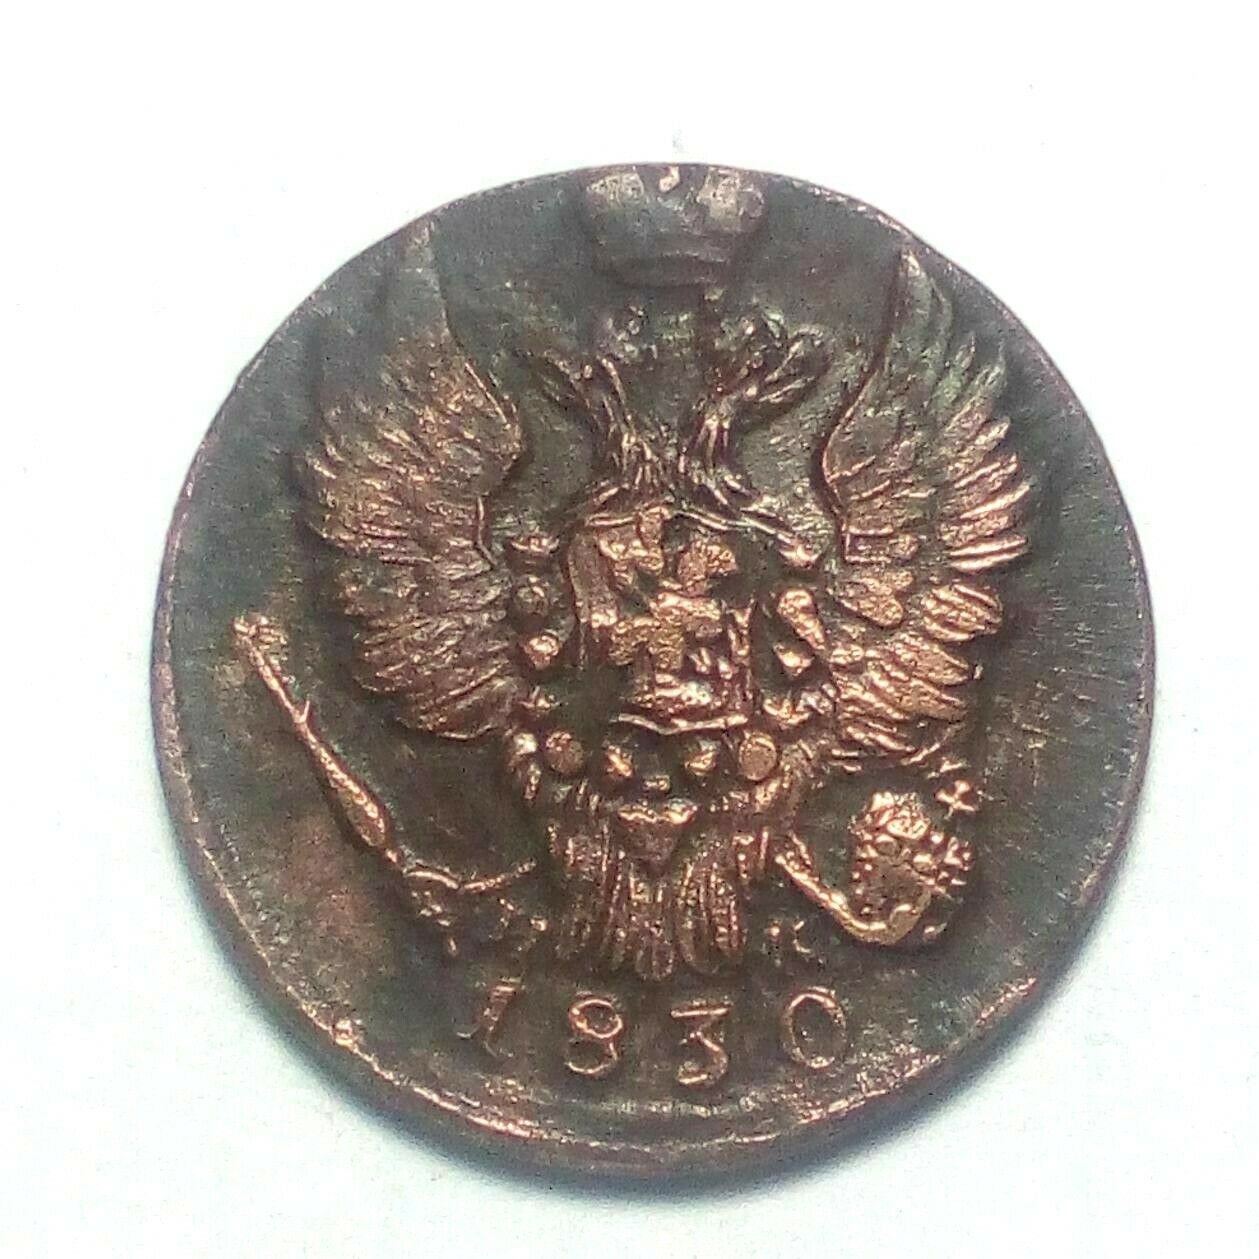 Russia Empire  1 Kopek 1830 Em  High Grade Mintmark "ЕМ" - Yekaterinburg